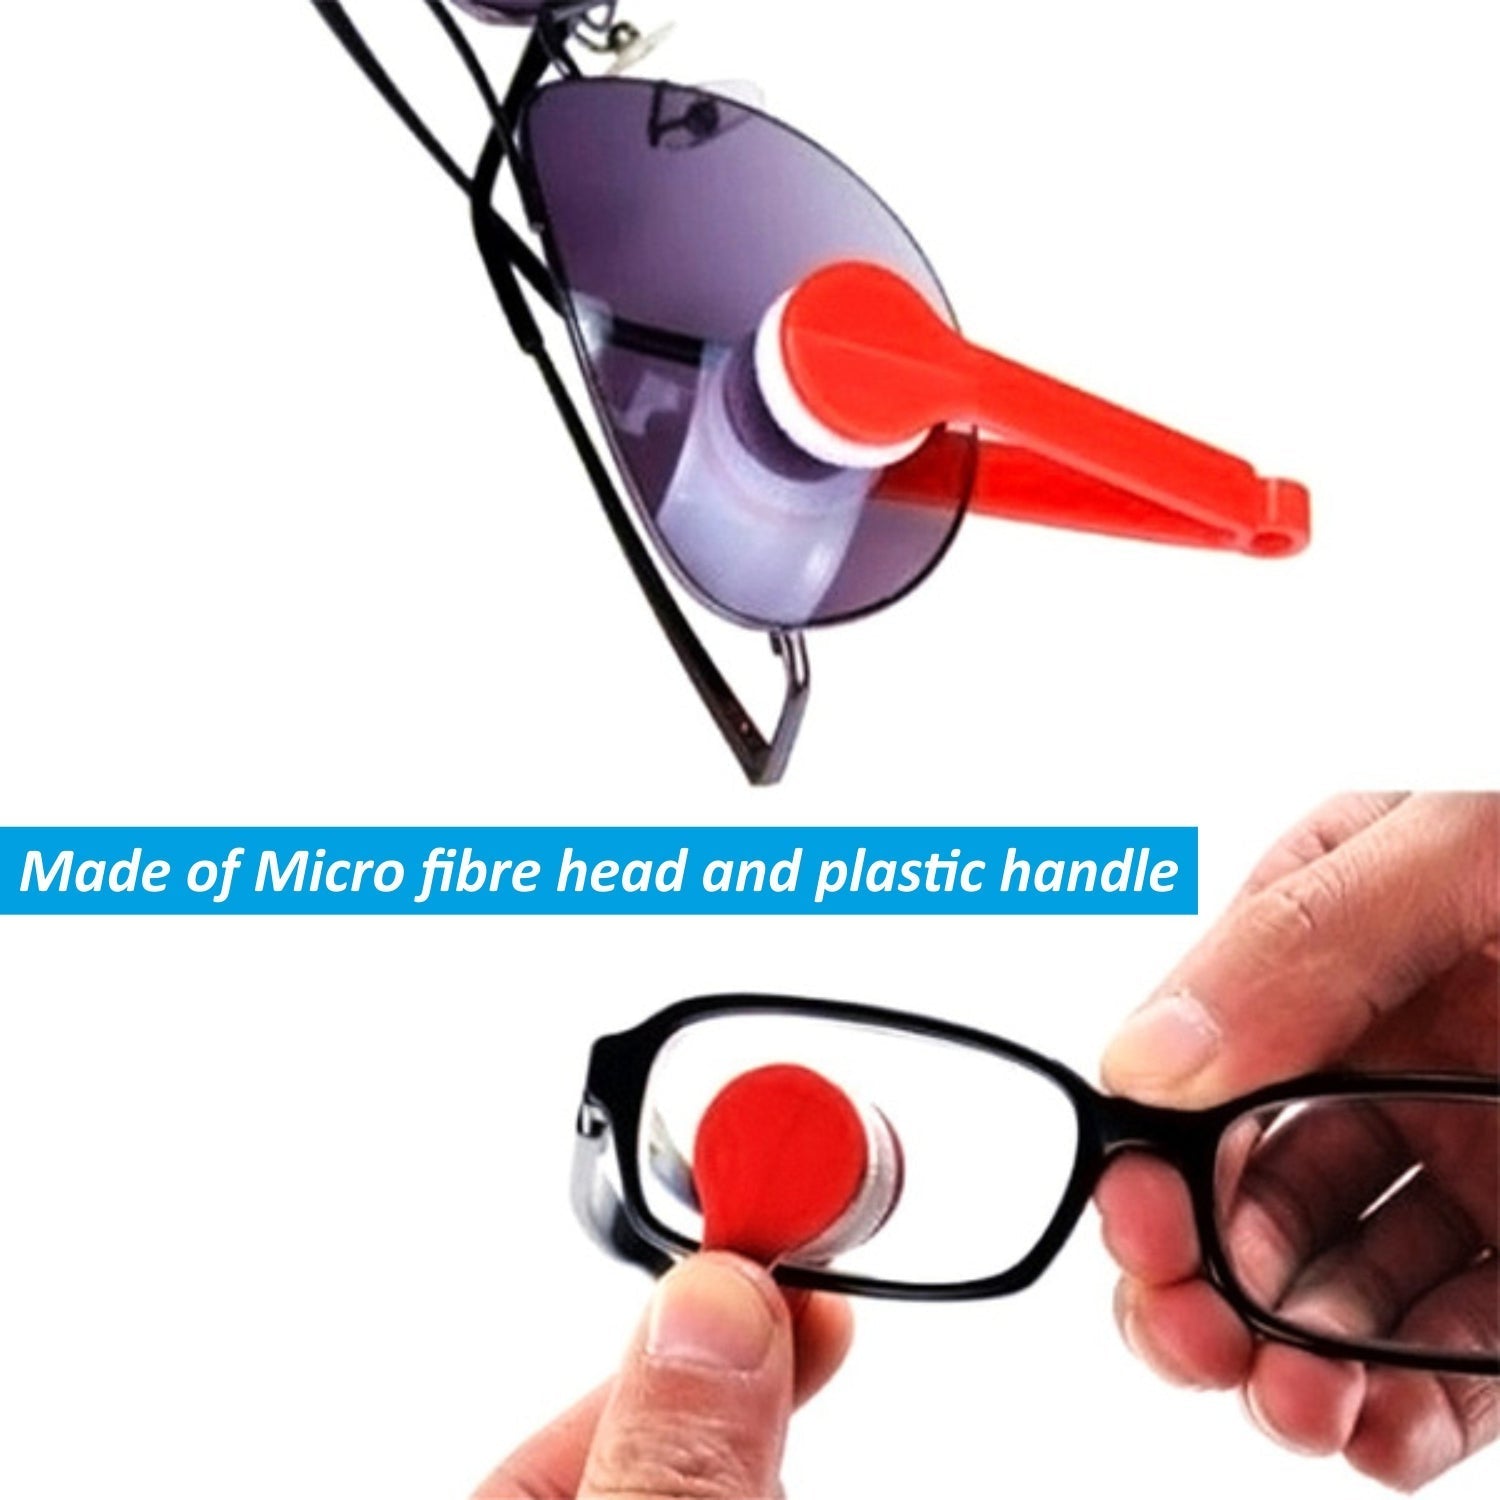 1353 Mini Sun glasses Eyeglass Microfiber Spectacles Cleaner DeoDap